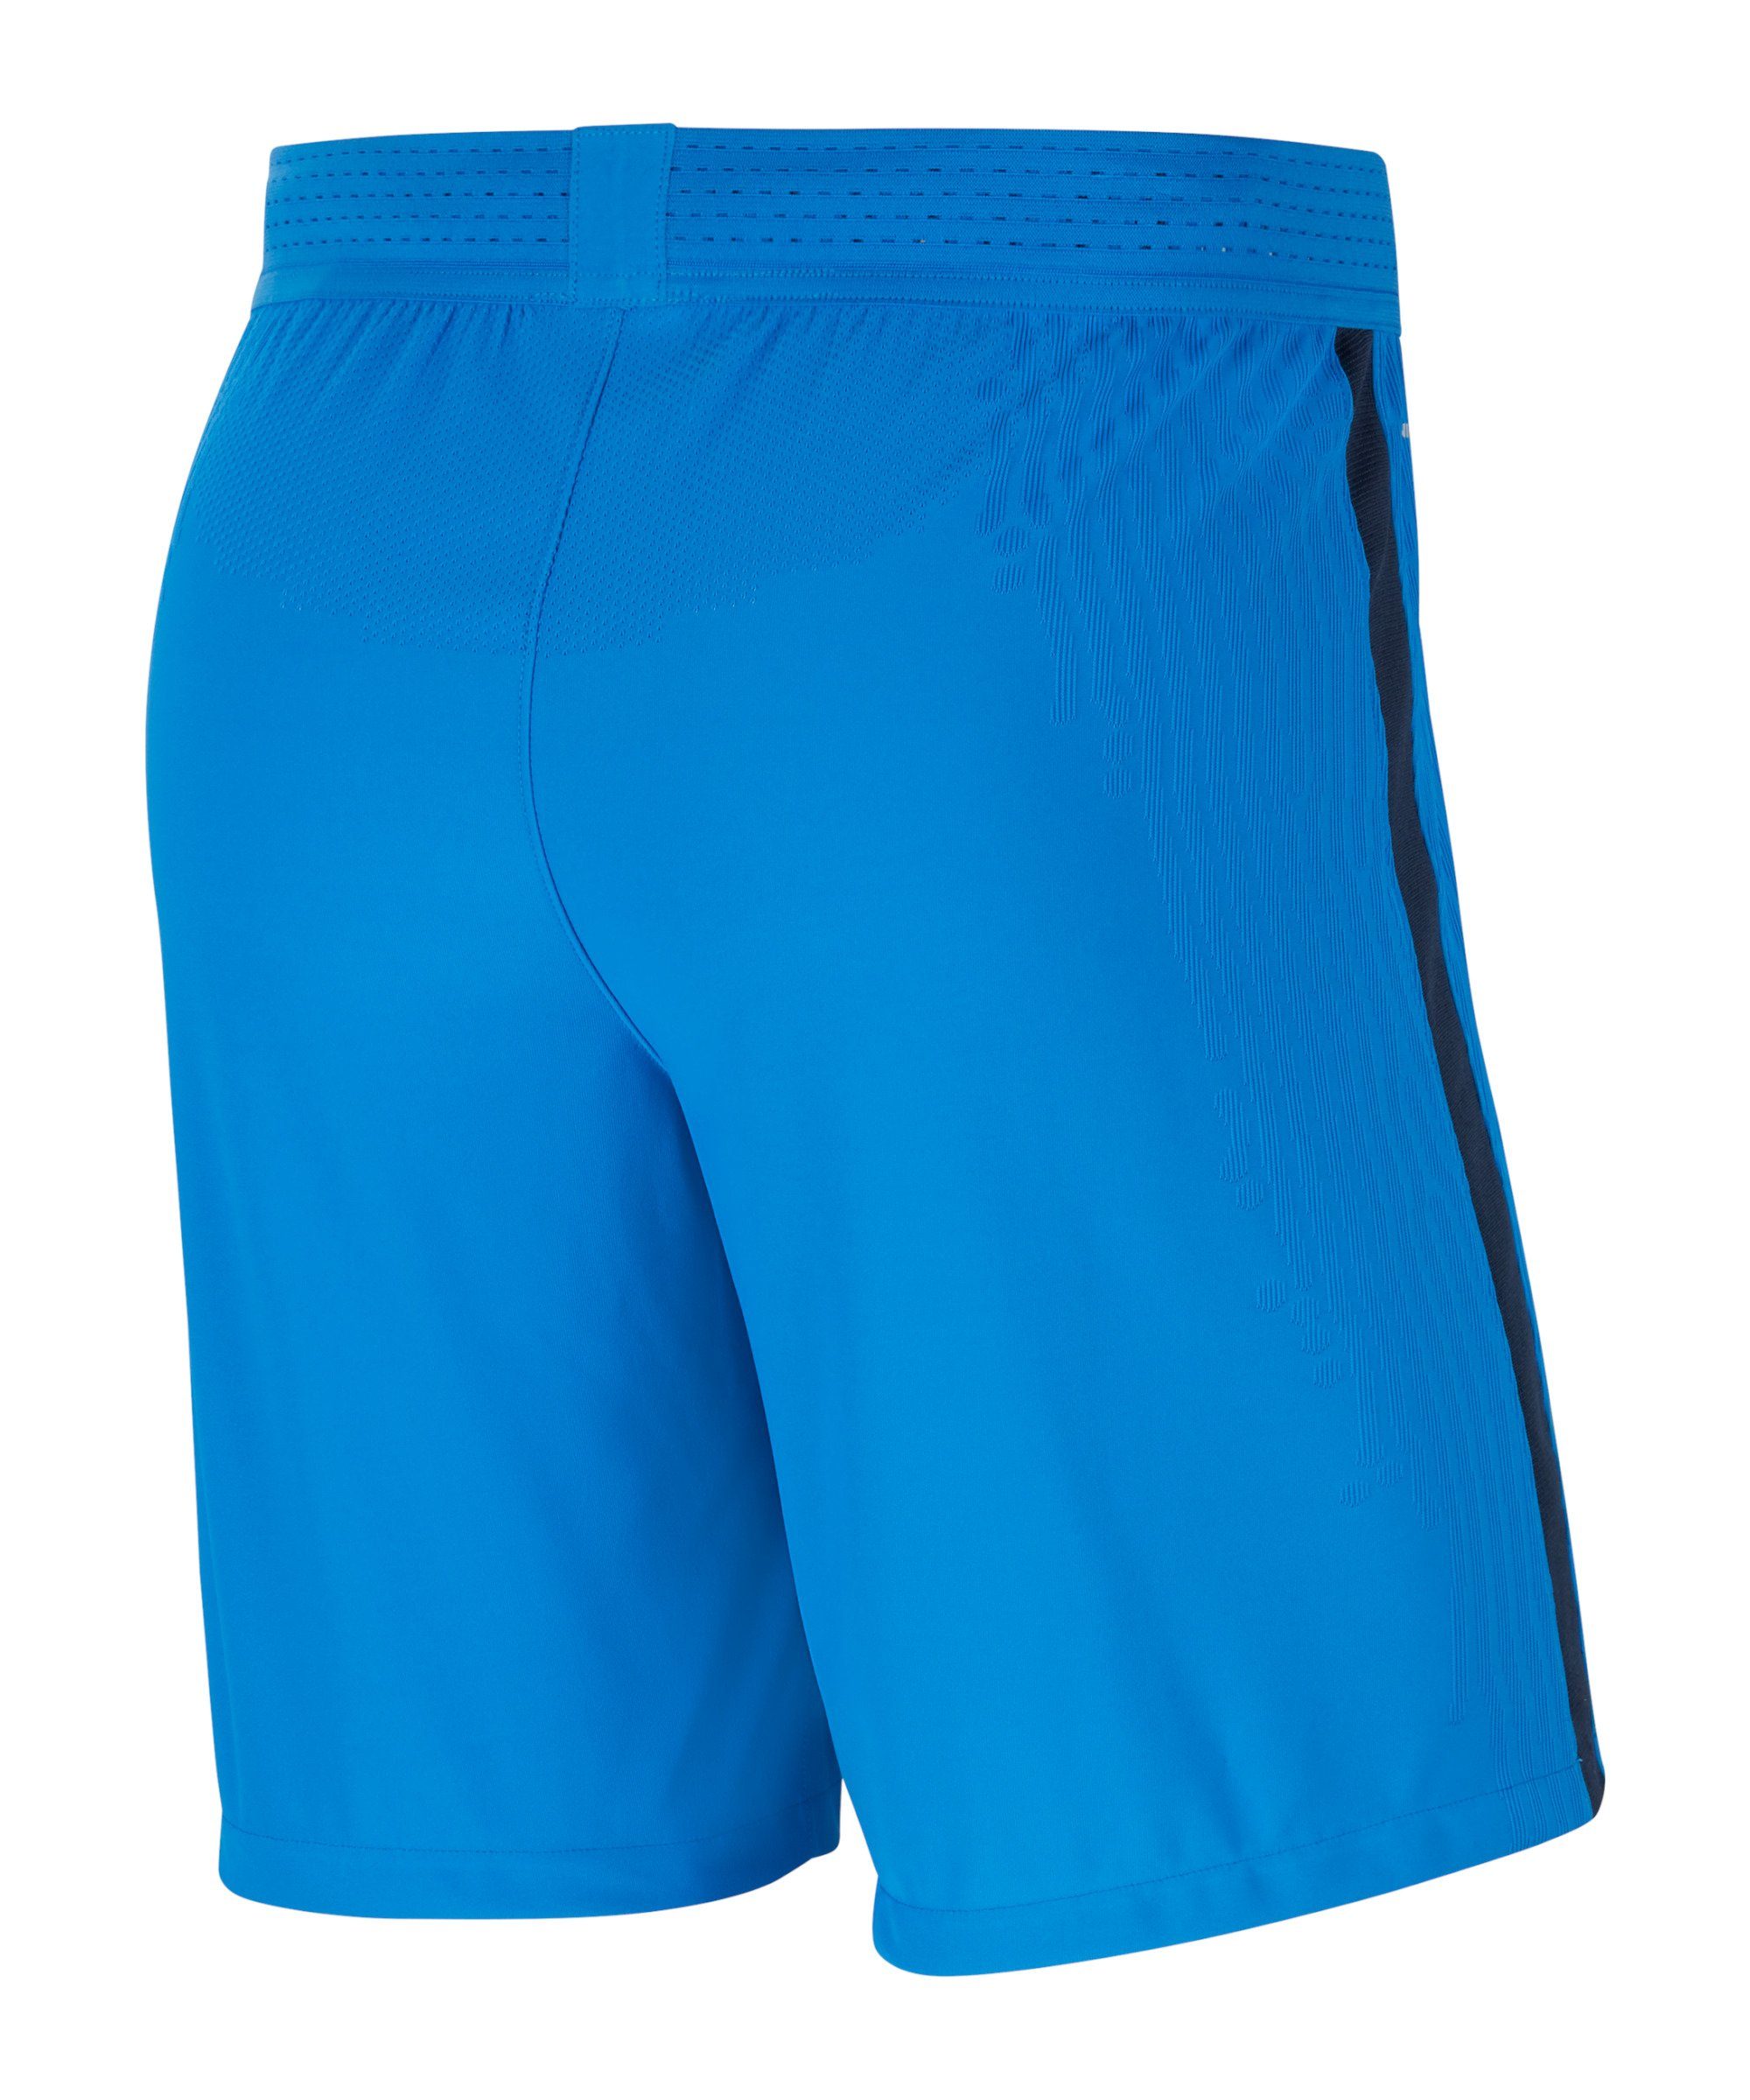 Knit Sporthose Short Vapor blauweiss III Nike